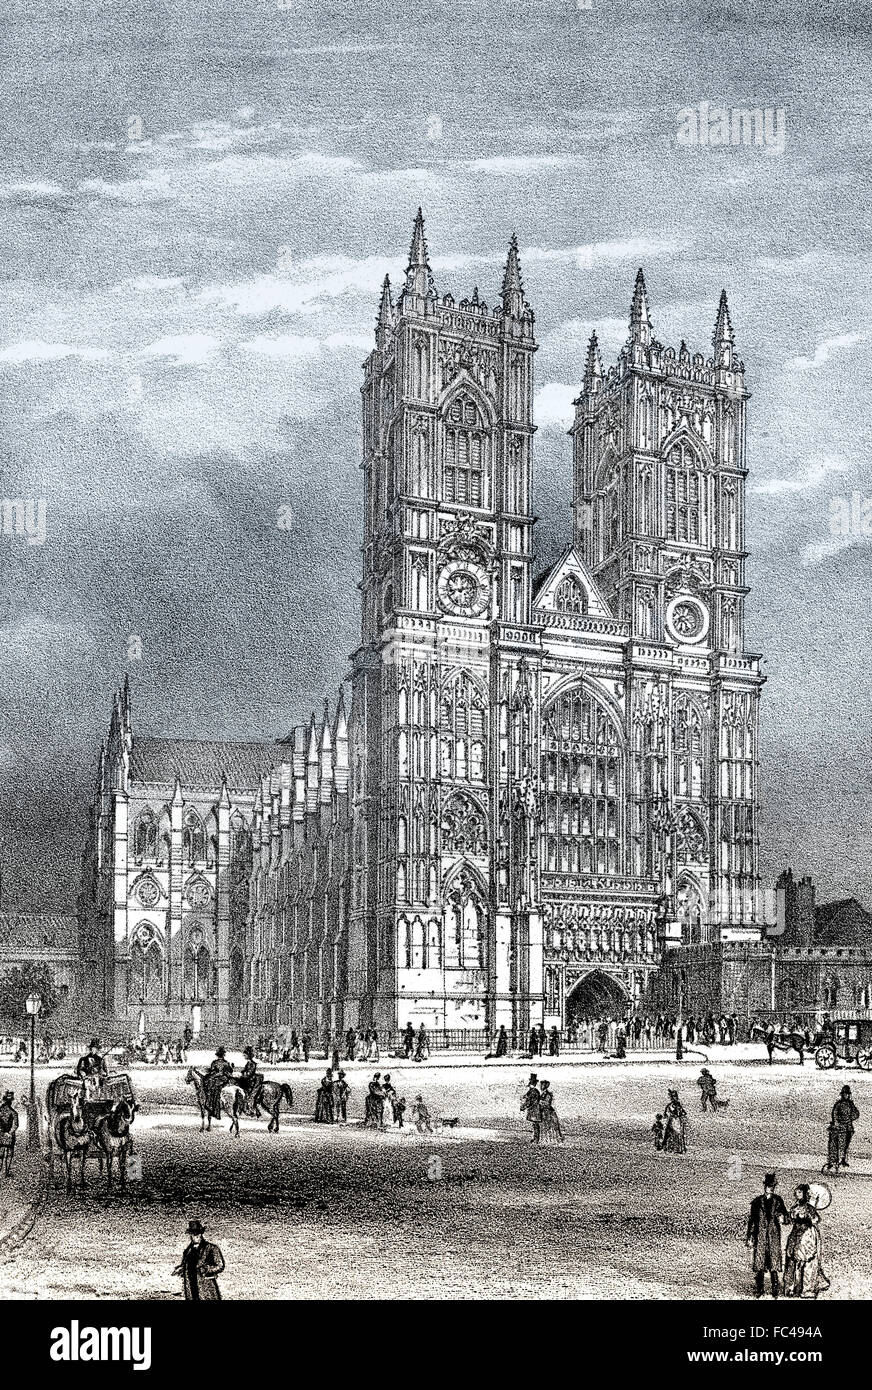 Bad Berka de l'abbaye de Westminster, 19e siècle, Londres, Angleterre Banque D'Images